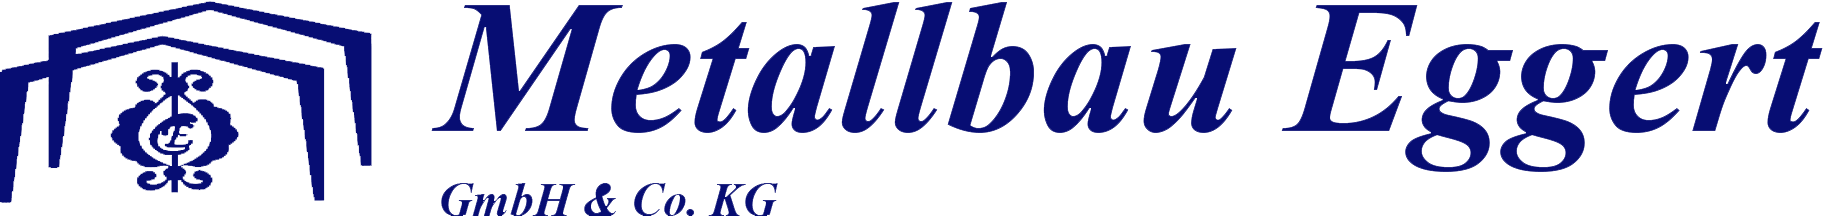 Metallbau Eggert GmbH & Co. KG - Logo